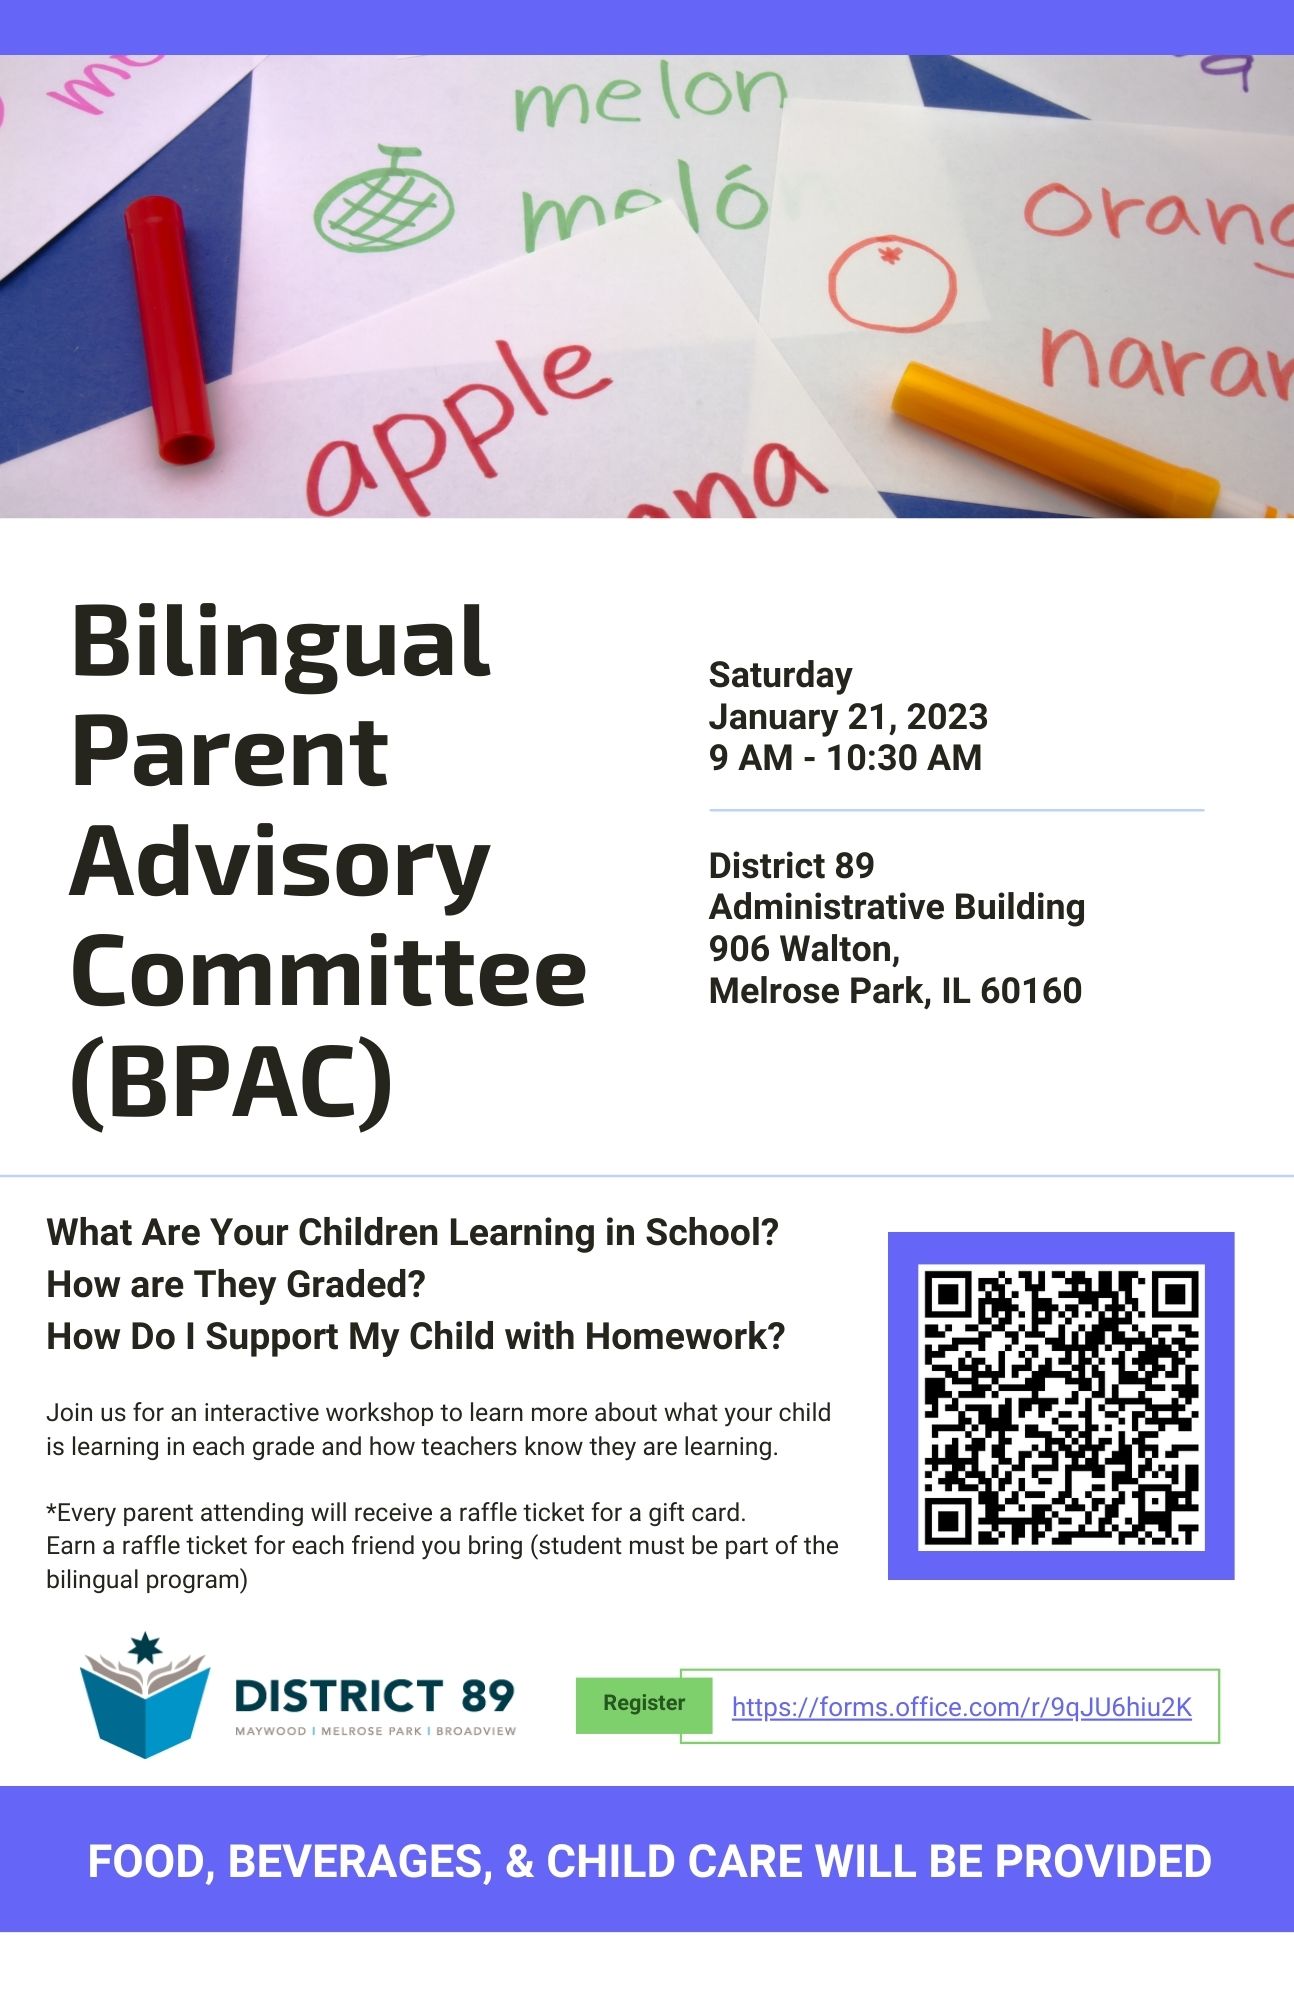 BPAC flyer in English